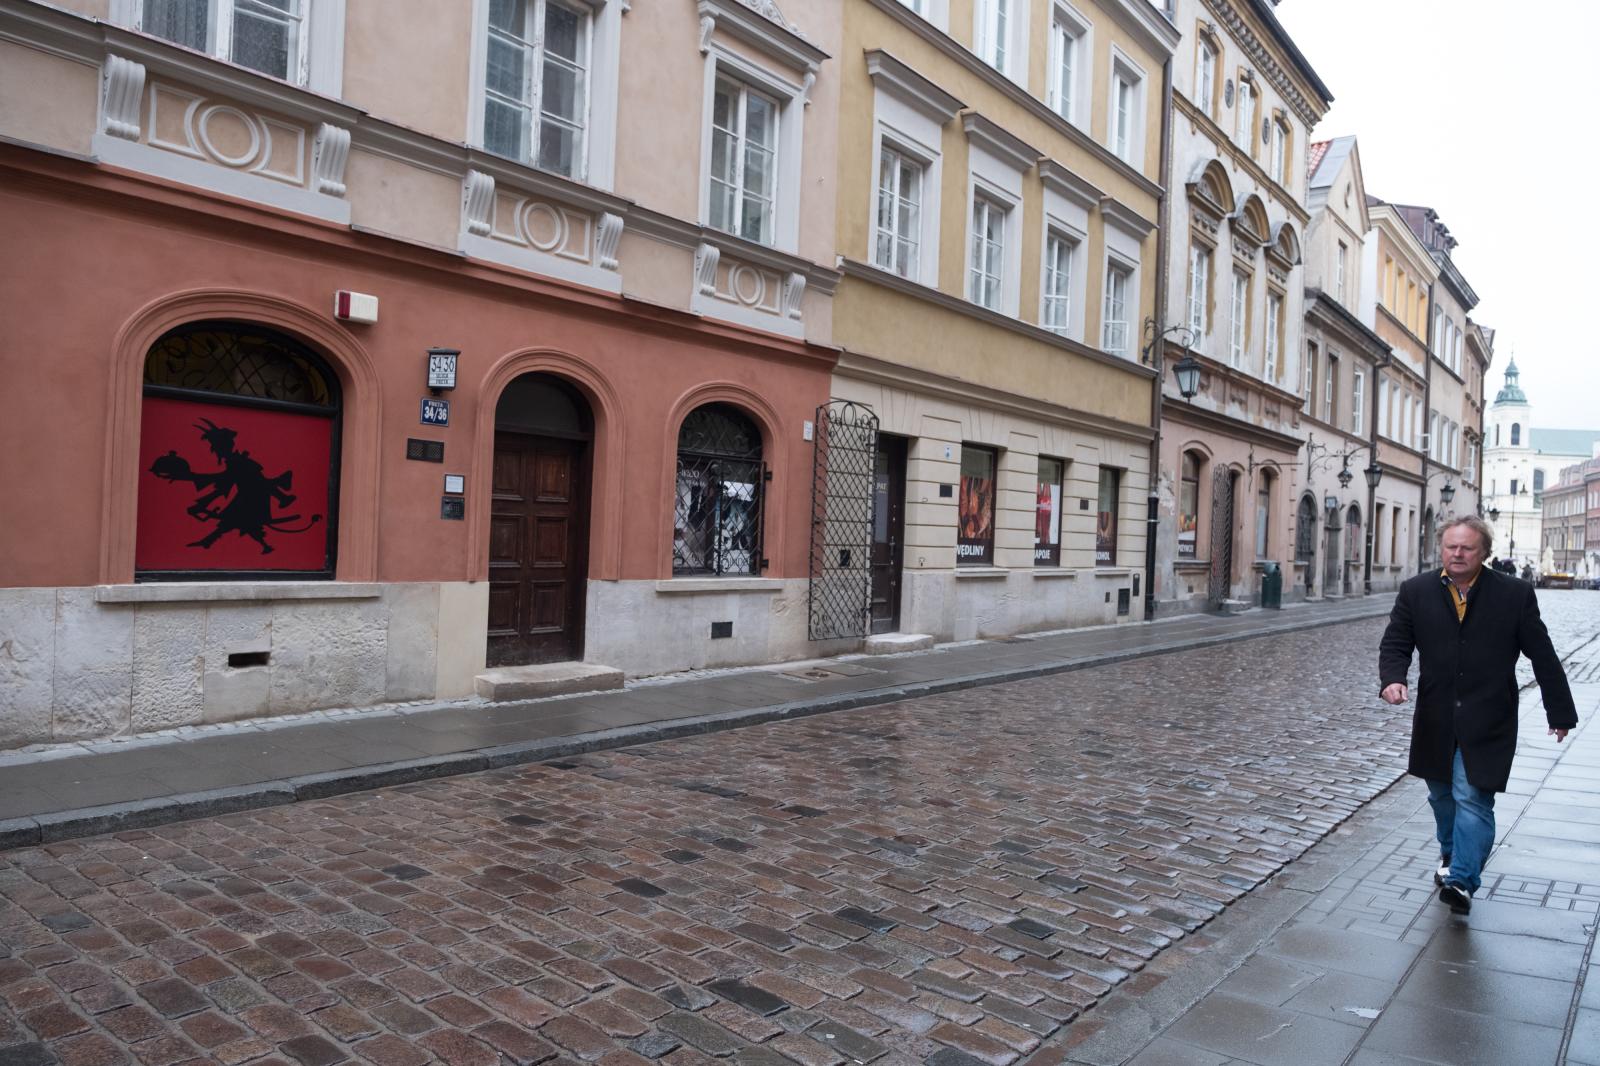 Man on Street Old Town Warsaw | Buy this image